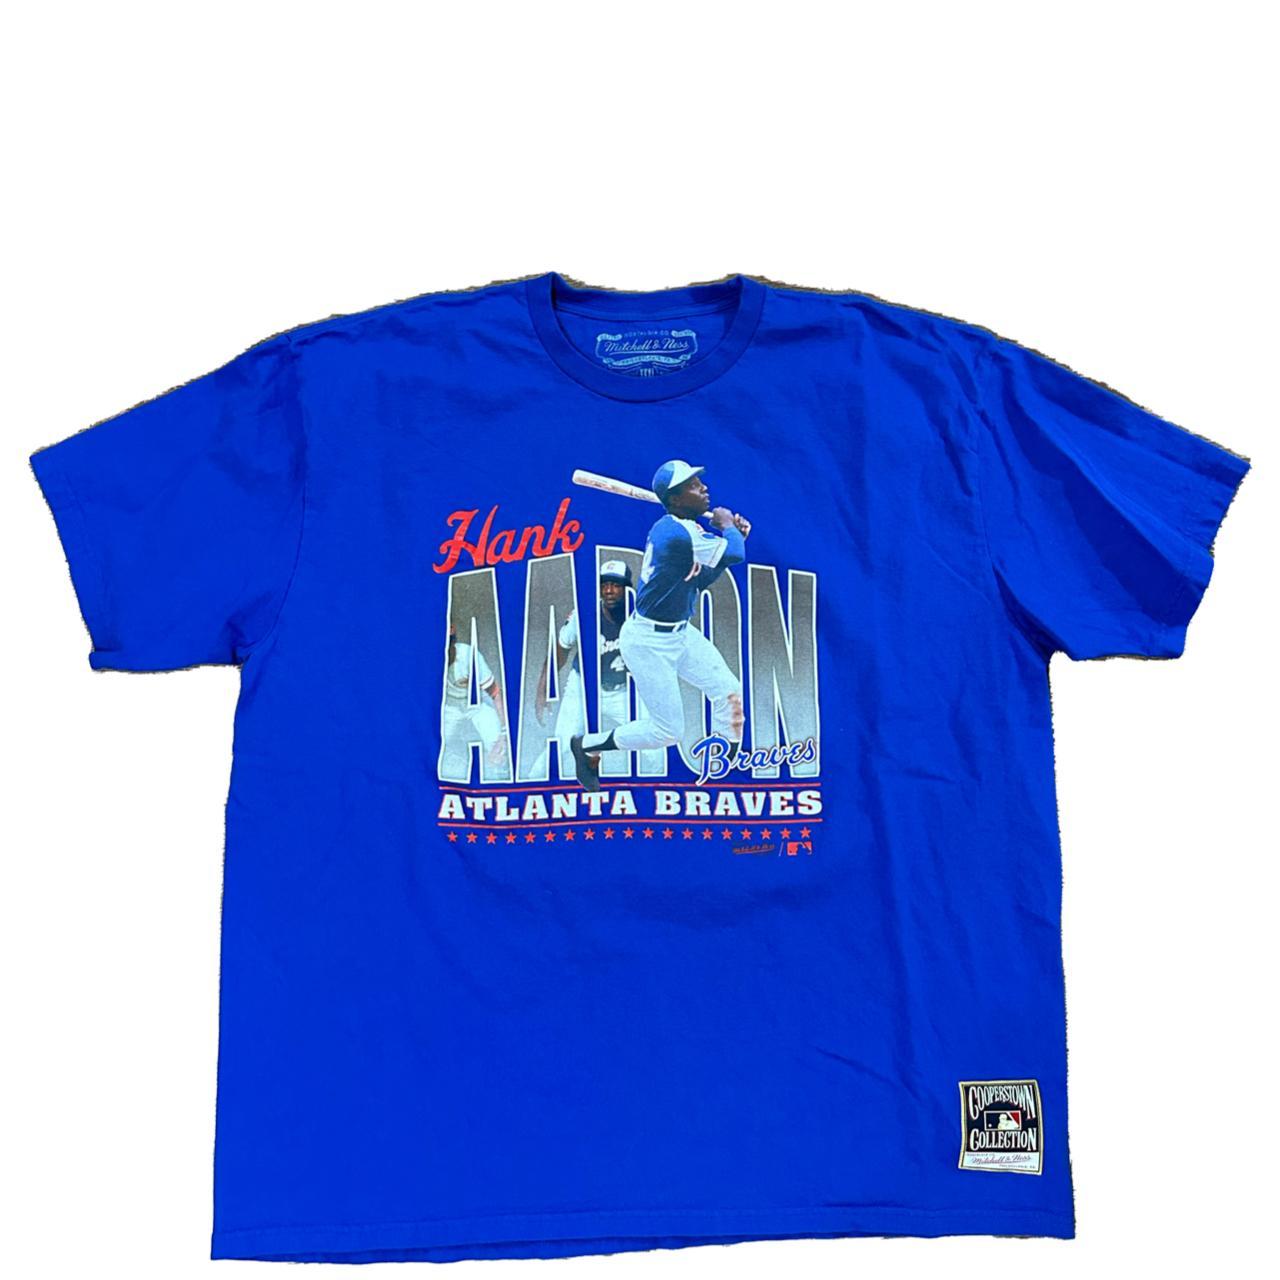 Hank Aaron In Atlanta Braves T-shirt